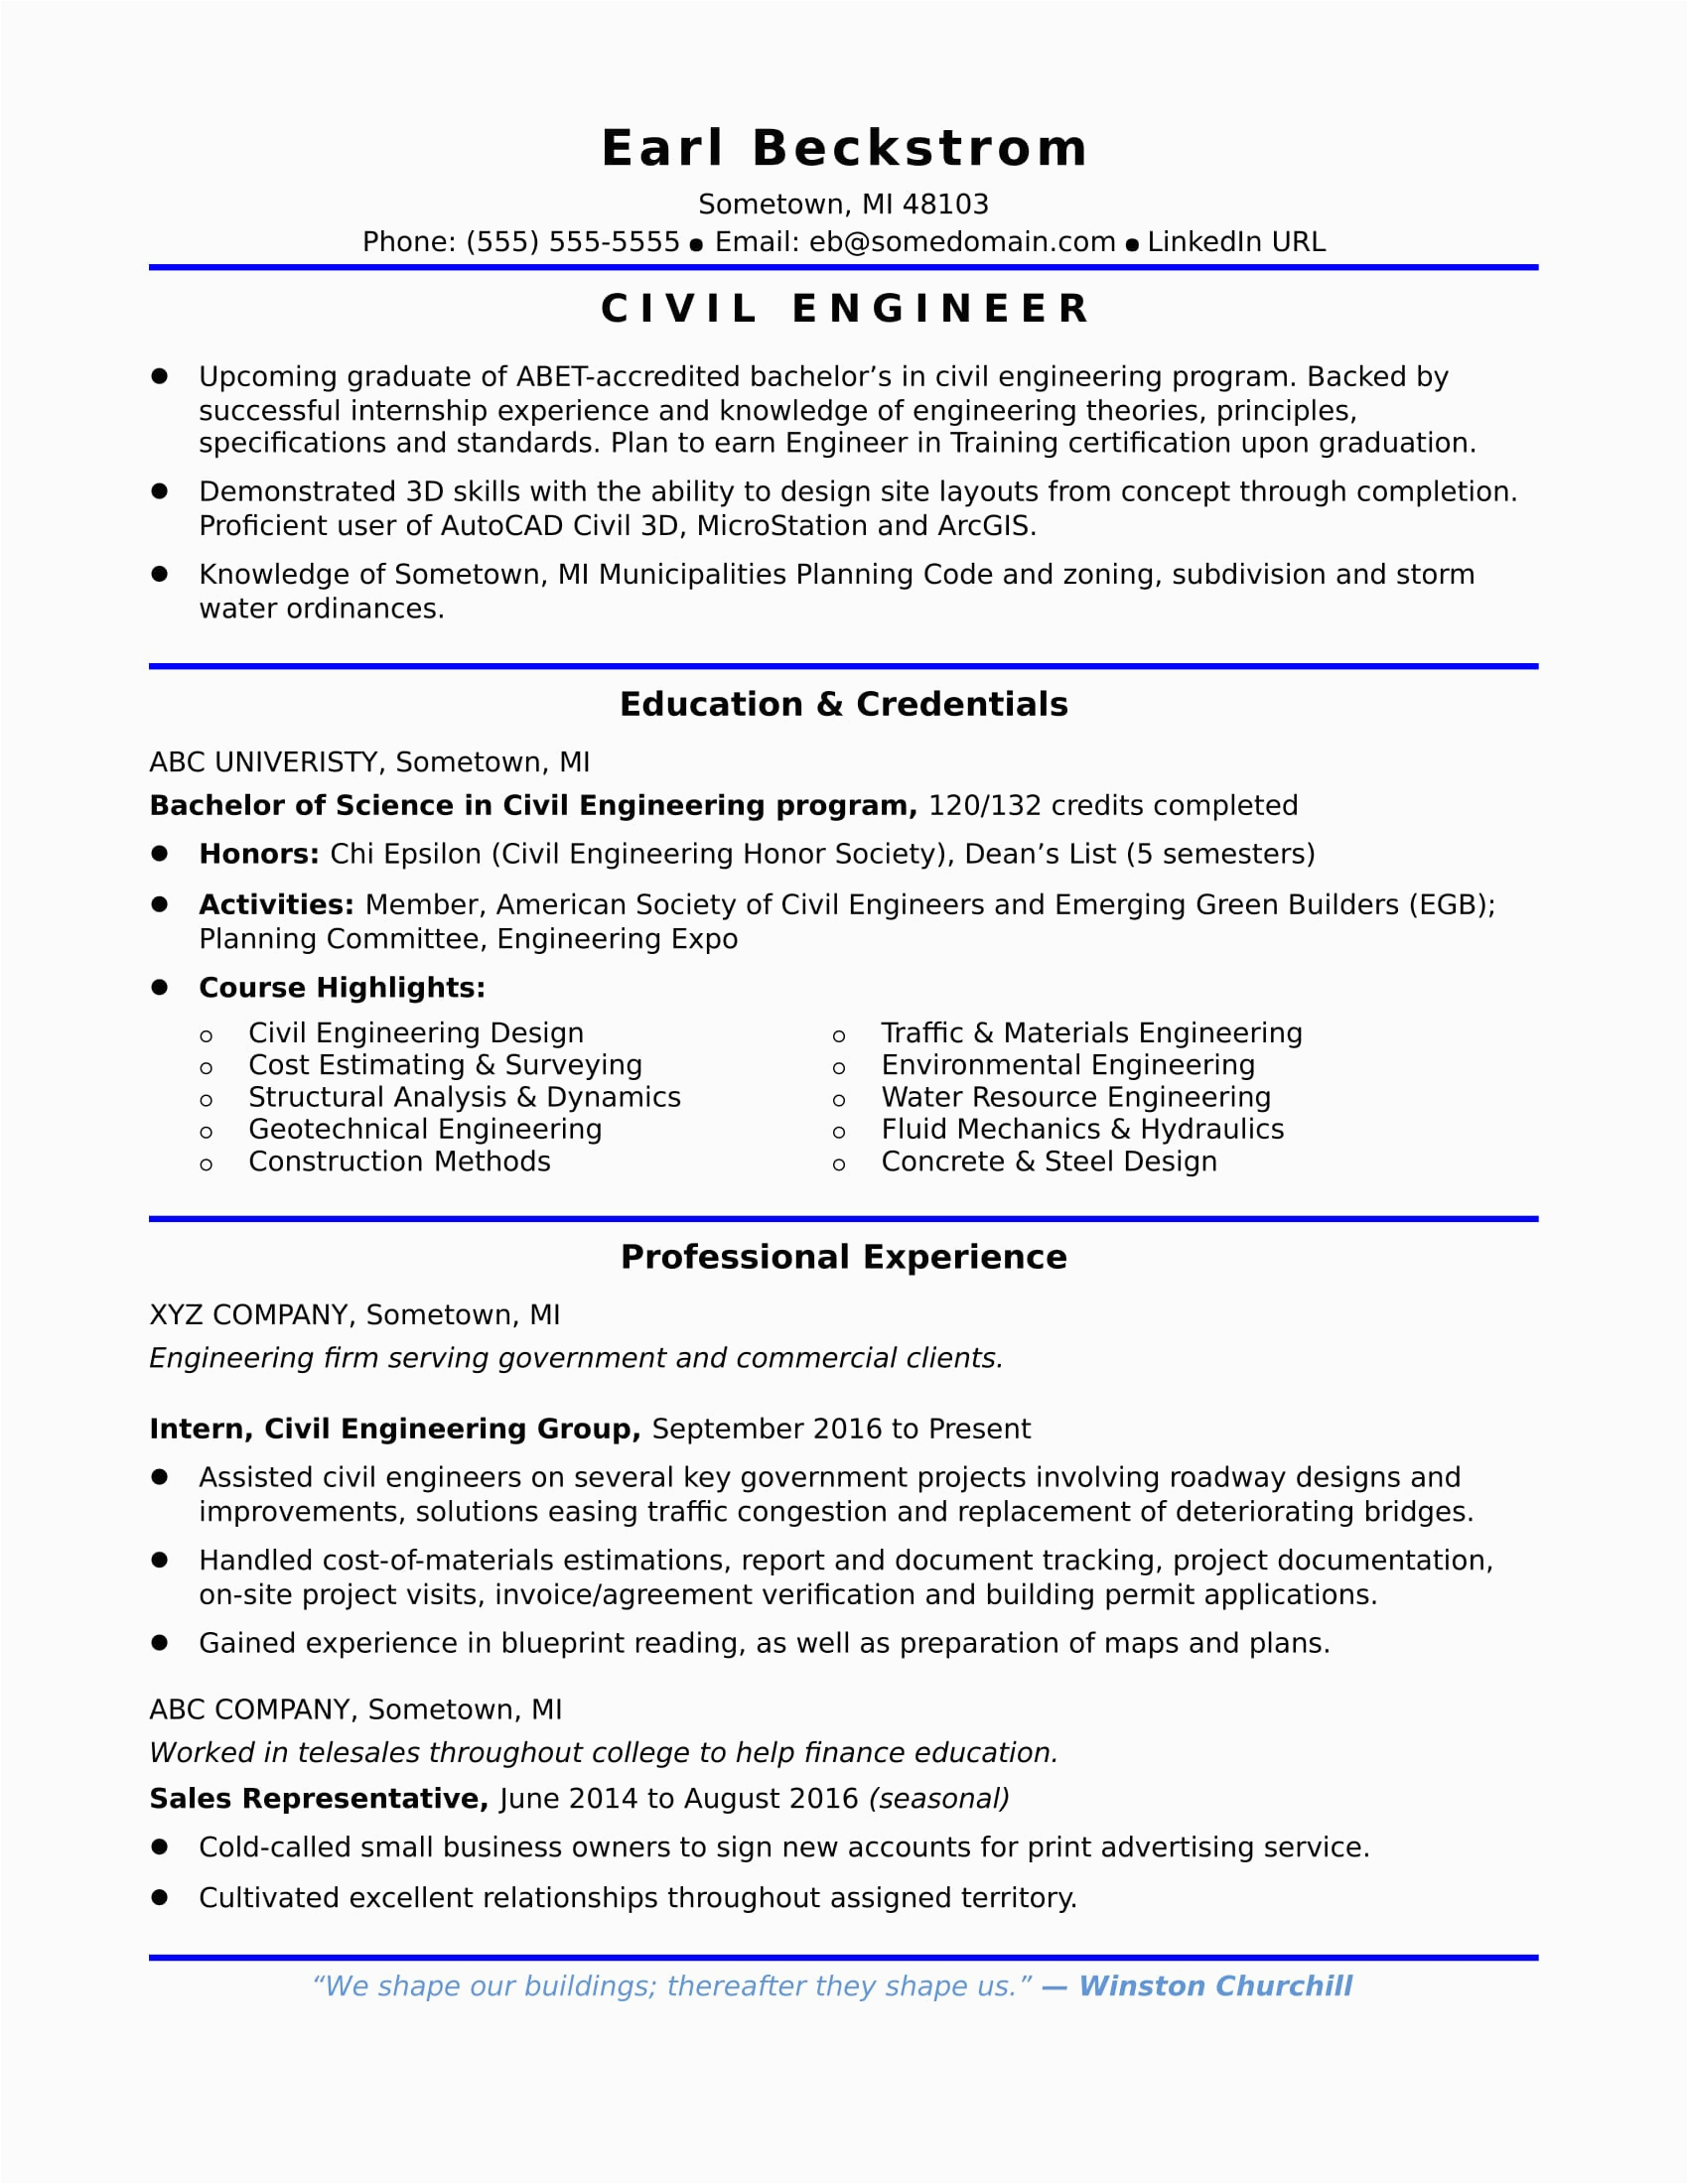 Sample Resume for Professional Civil Engineer Sample Resume for An Entry Level Civil Engineer